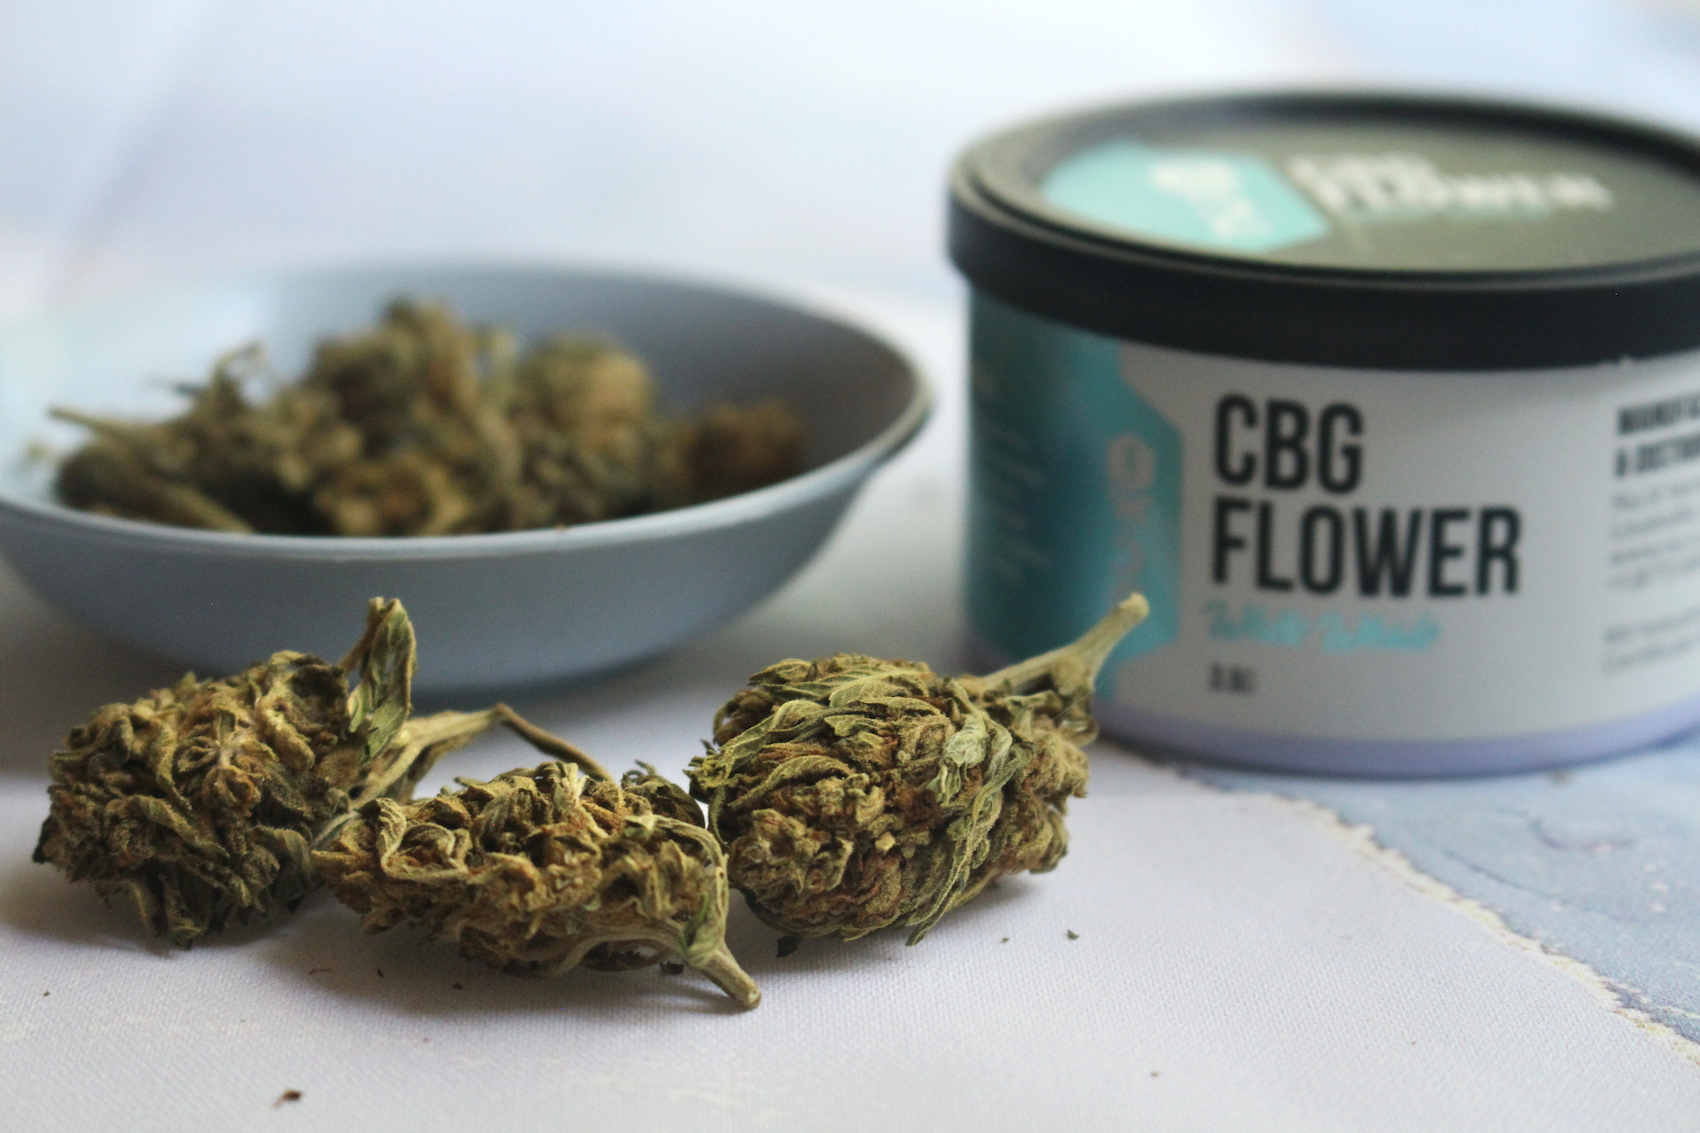 CBG flower product